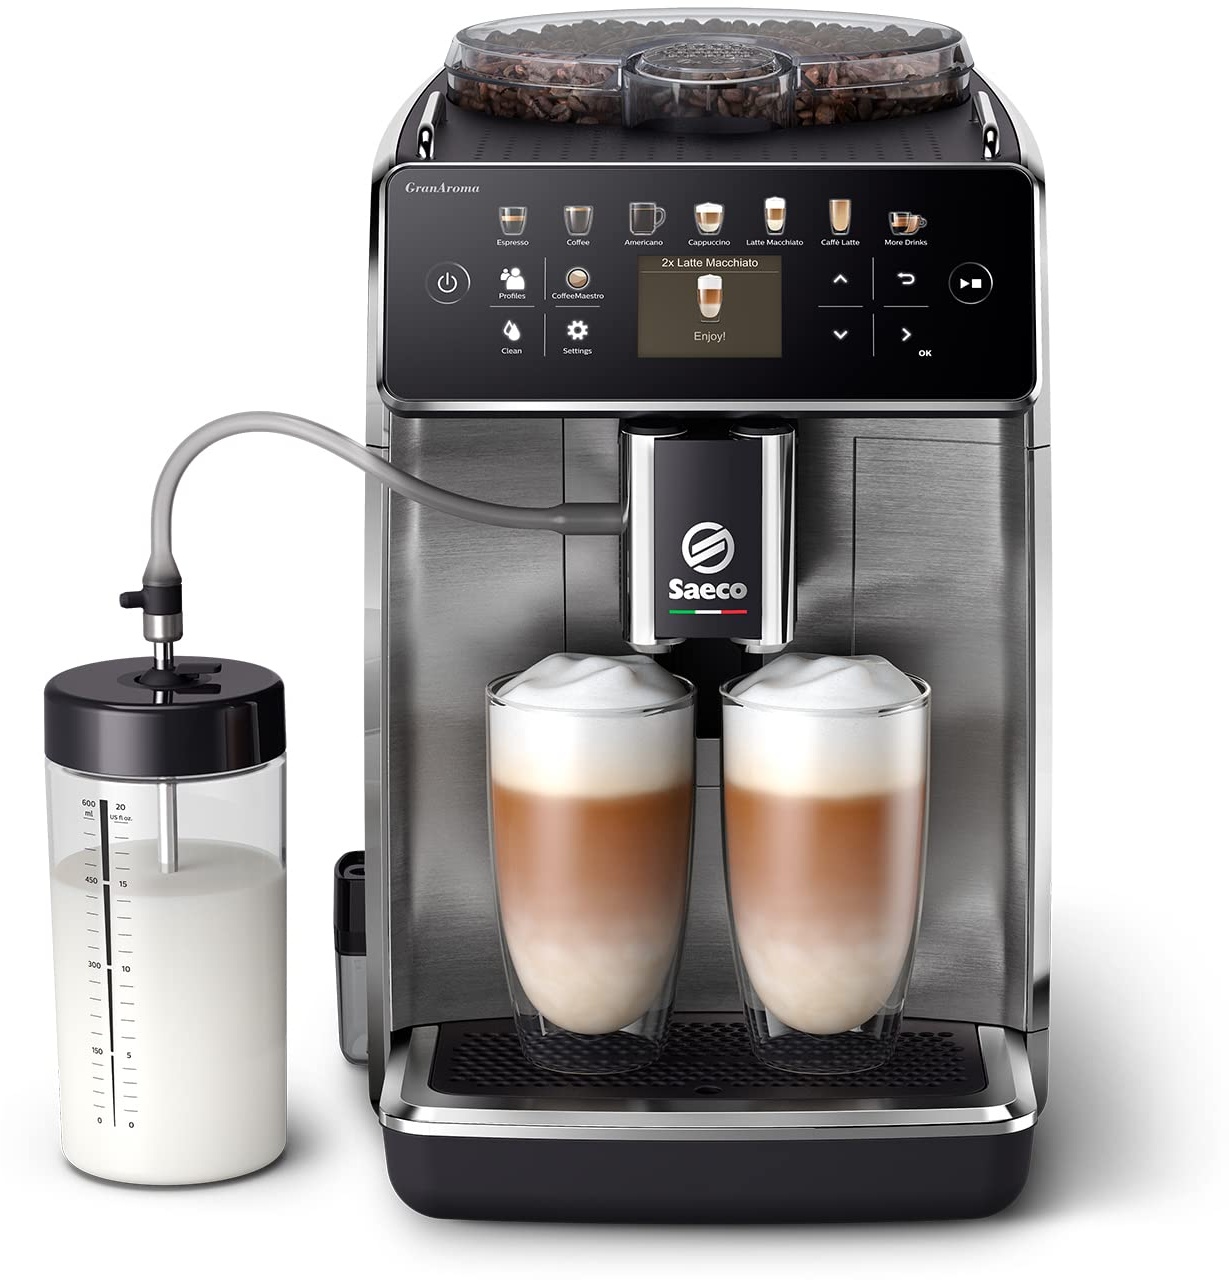 Saeco GranAroma Kaffeevollautomat – 16 Kaffeespezialitäten, Intuitives Farbdisplay, 6 Benutzerprofile, Keramikmahlwerk‎,1.2 Liter,38.3 x 26.2 x 44.8 cm (SM6585/00)